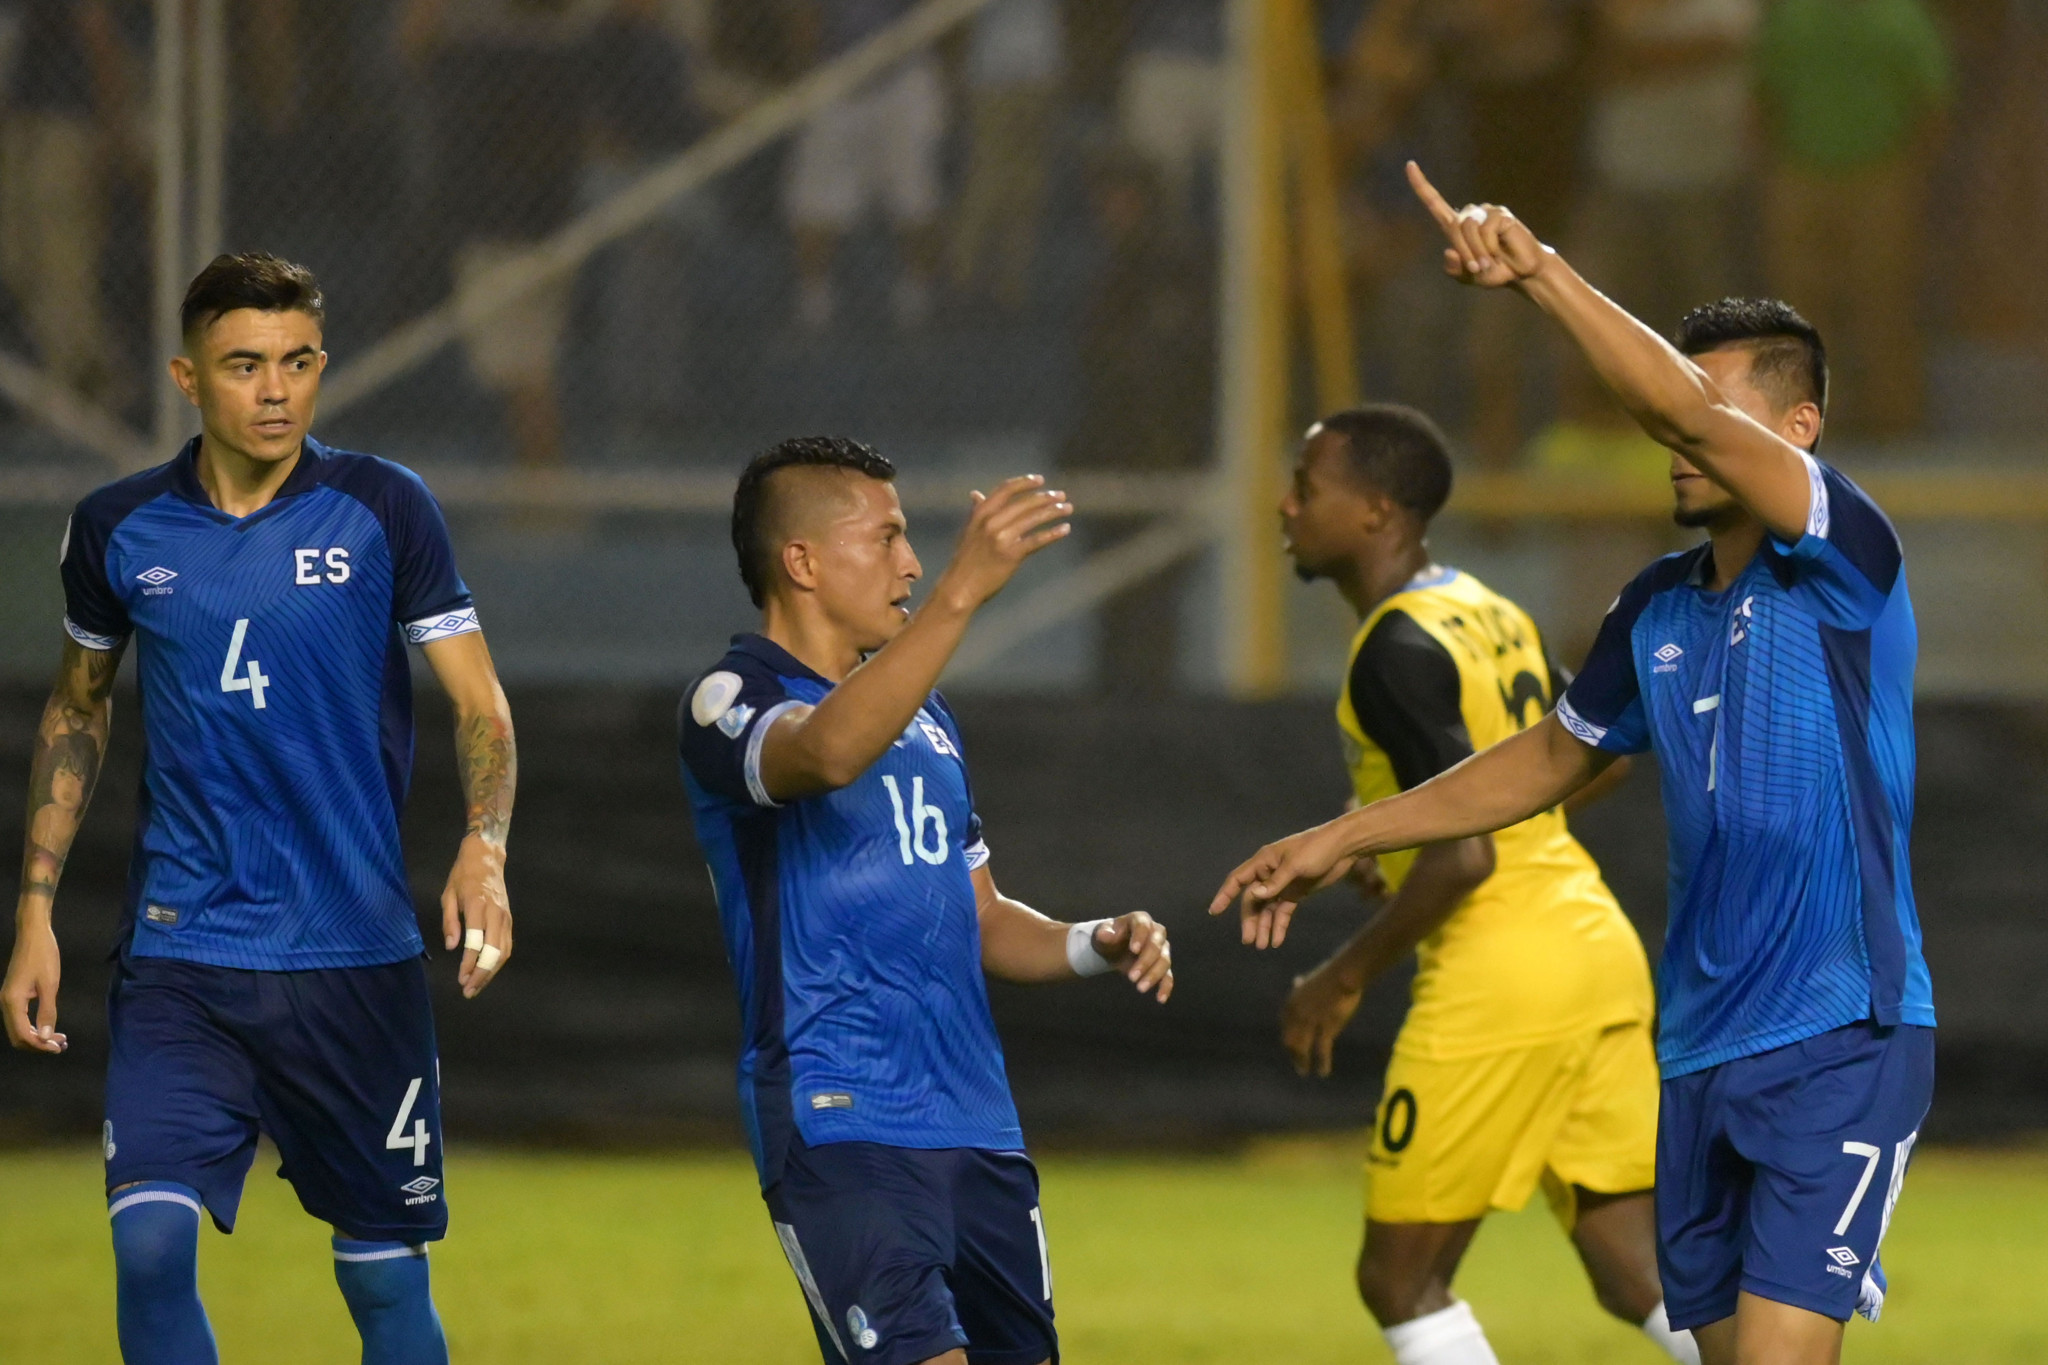 NOC helping to fund El Salvador football team training camp ahead of Tokyo 2020 qualifier